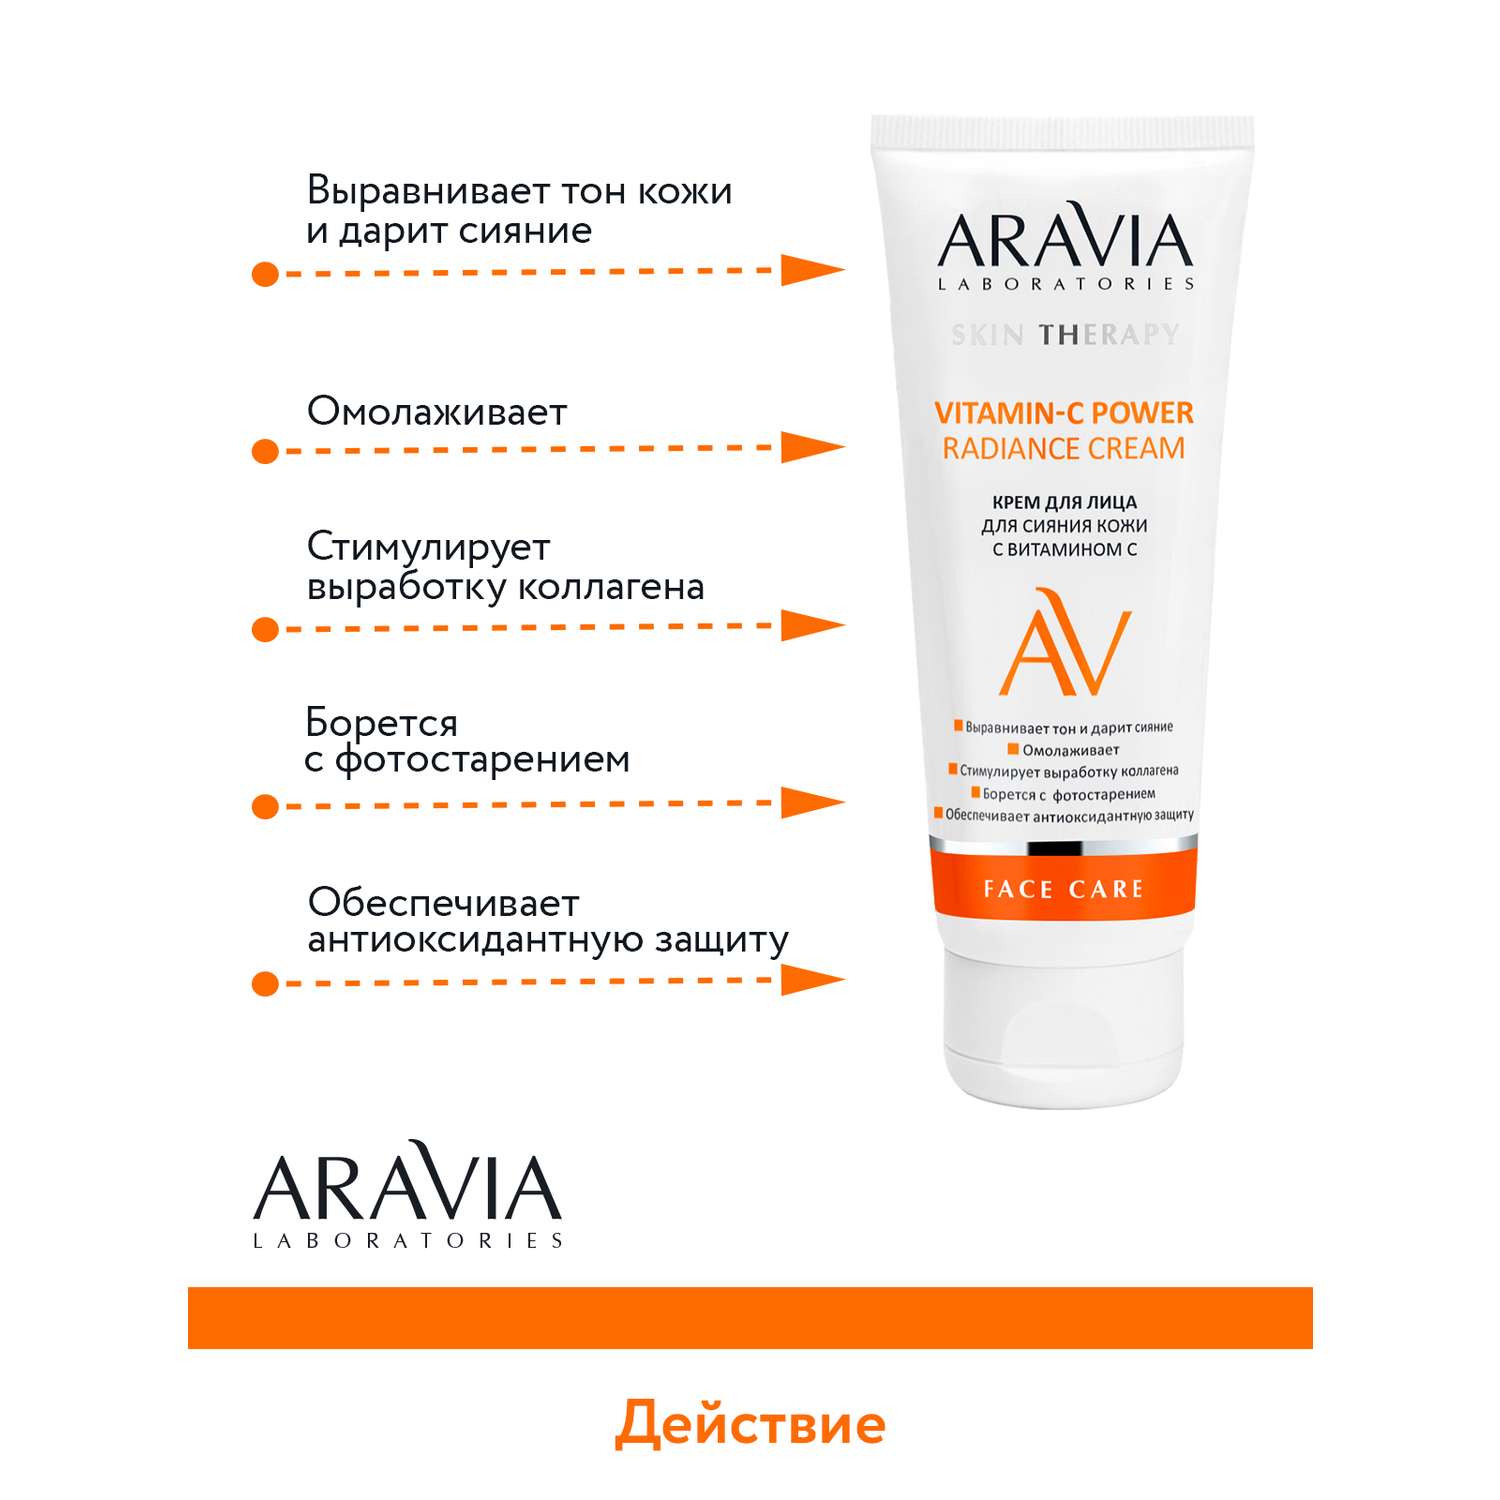 Крем для лица ARAVIA Laboratories для сияния кожи с Витамином С Vitamin-C Power Radiance Cream 50 мл - фото 5